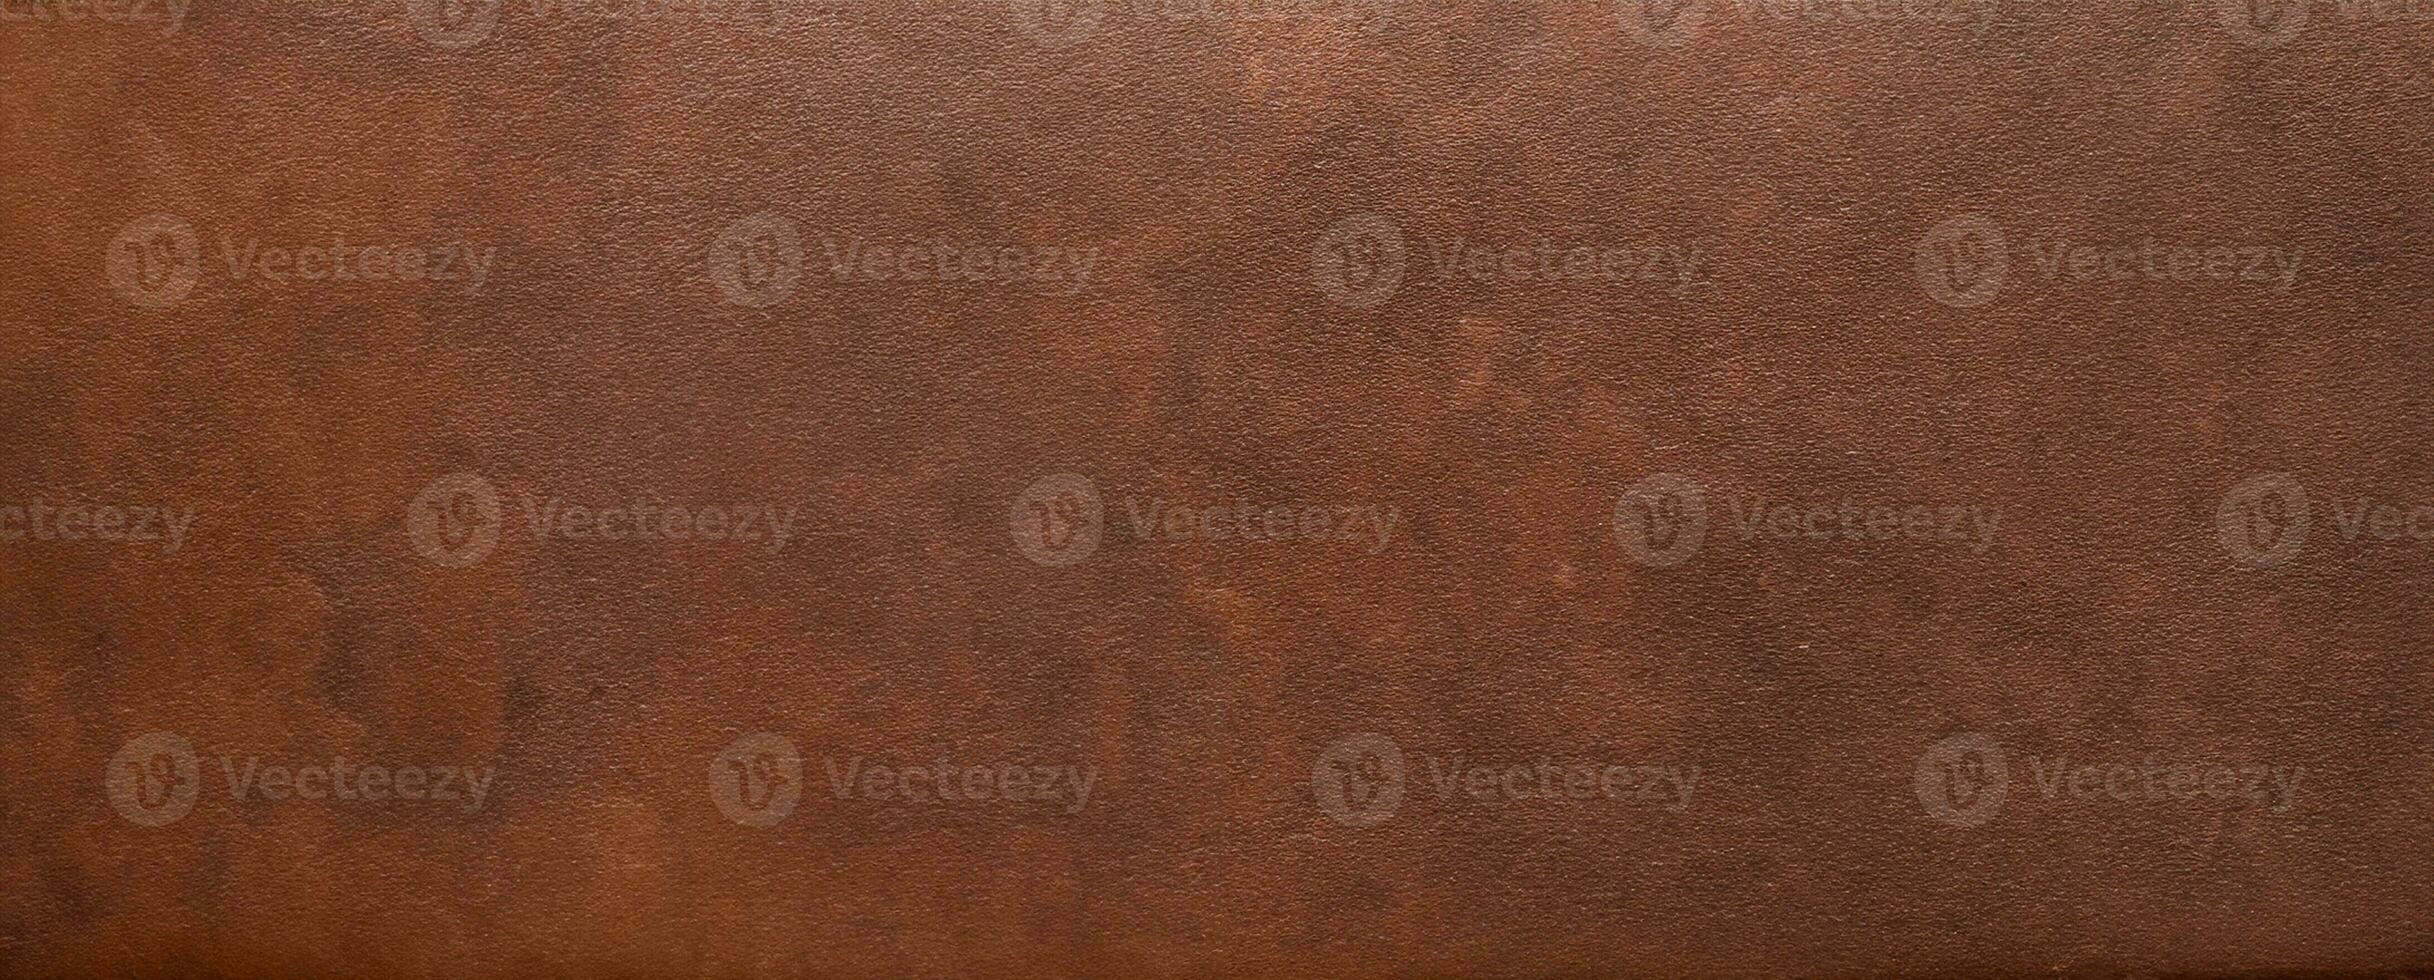 brun läder textur bakgrund stänga upp foto